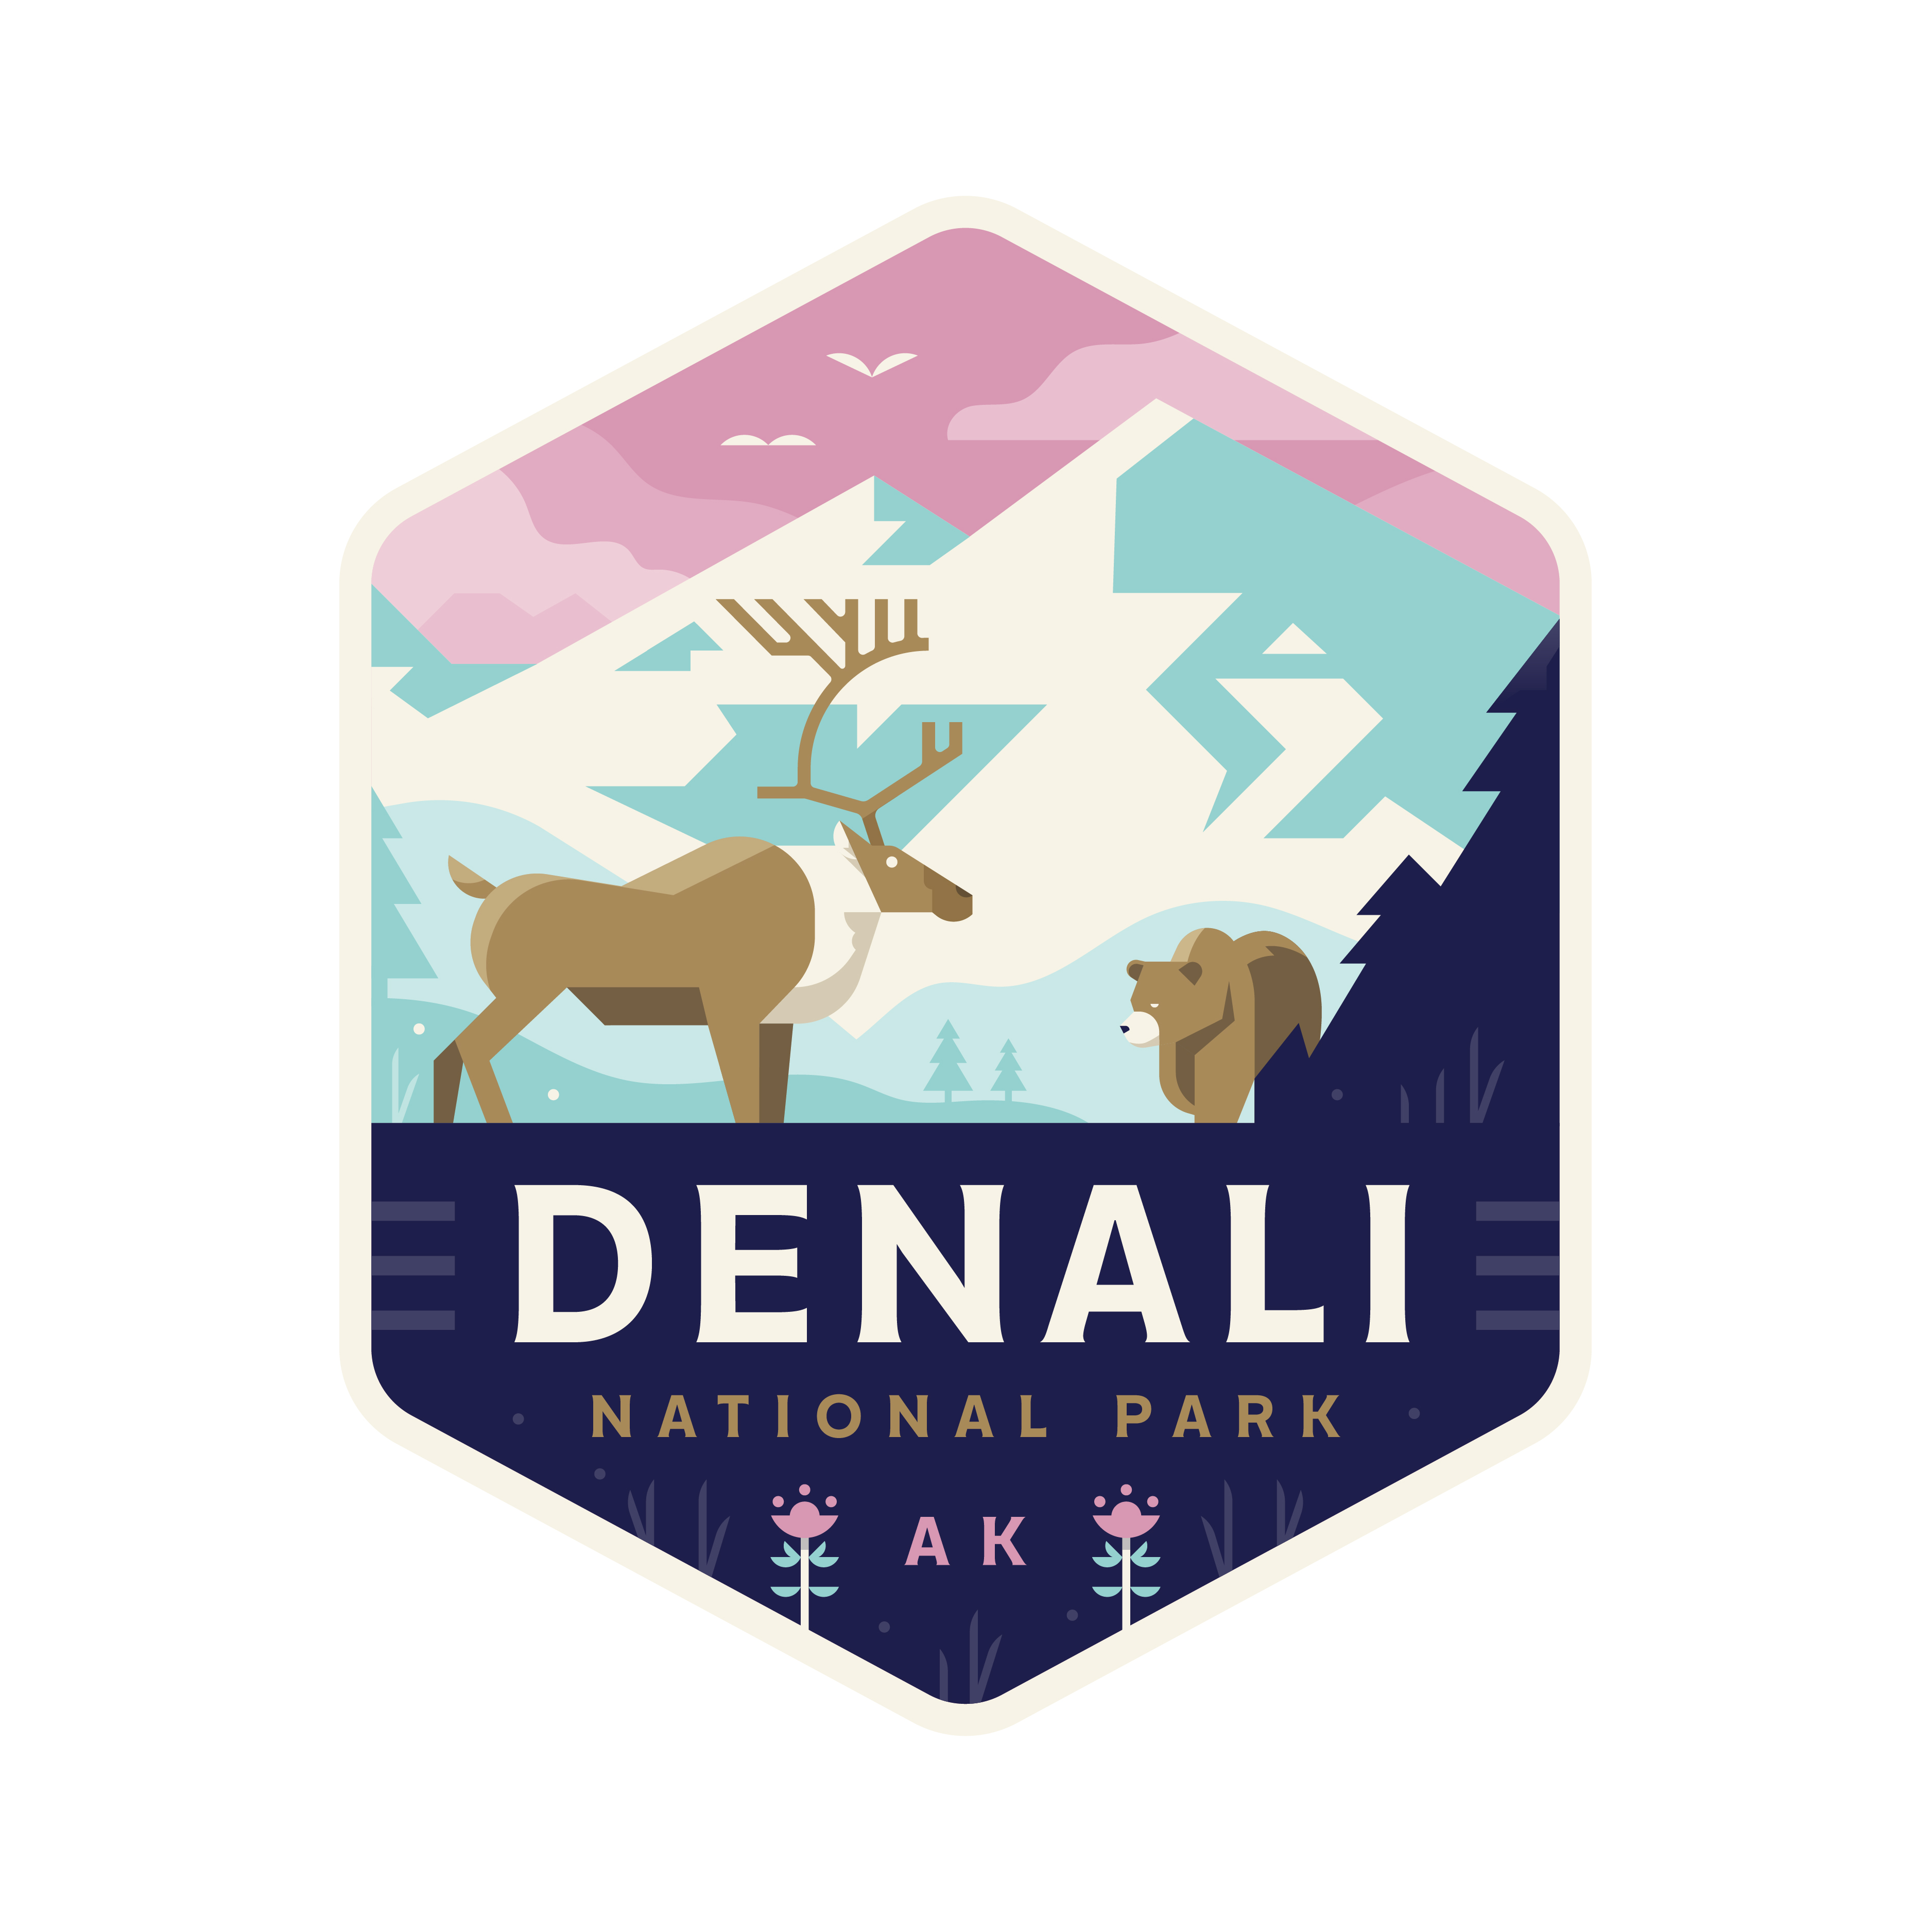 Denali National Park logo design by logo designer Trey Ingram for your inspiration and for the worlds largest logo competition